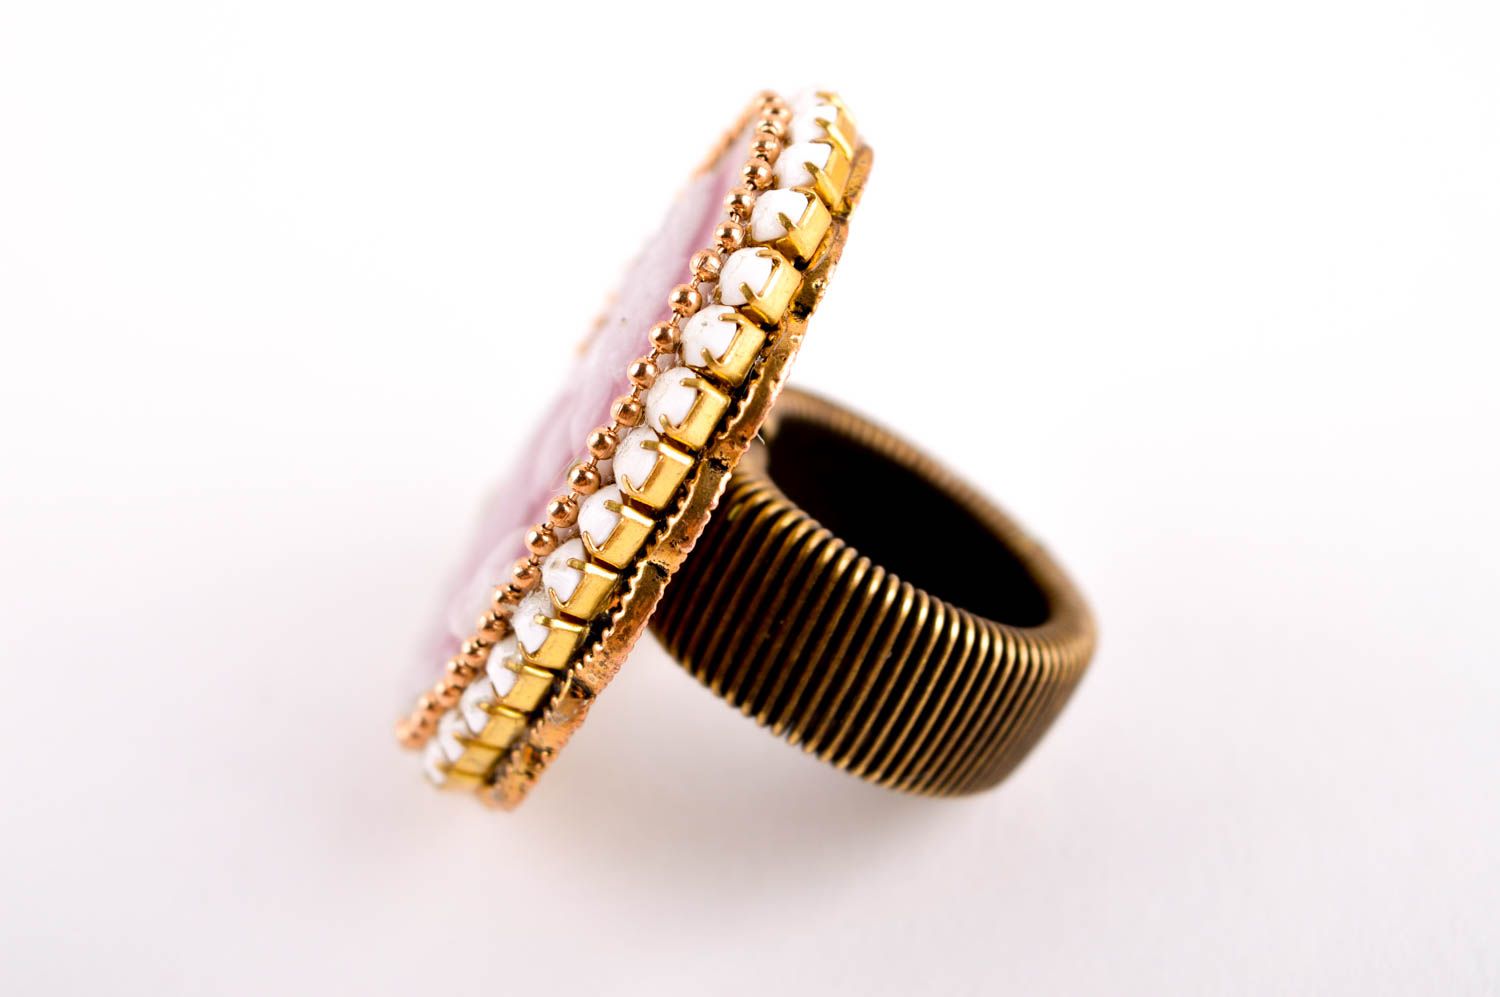 Handmade ring designer ring unusual ring with stone beautiful jewelry gift ideas photo 3